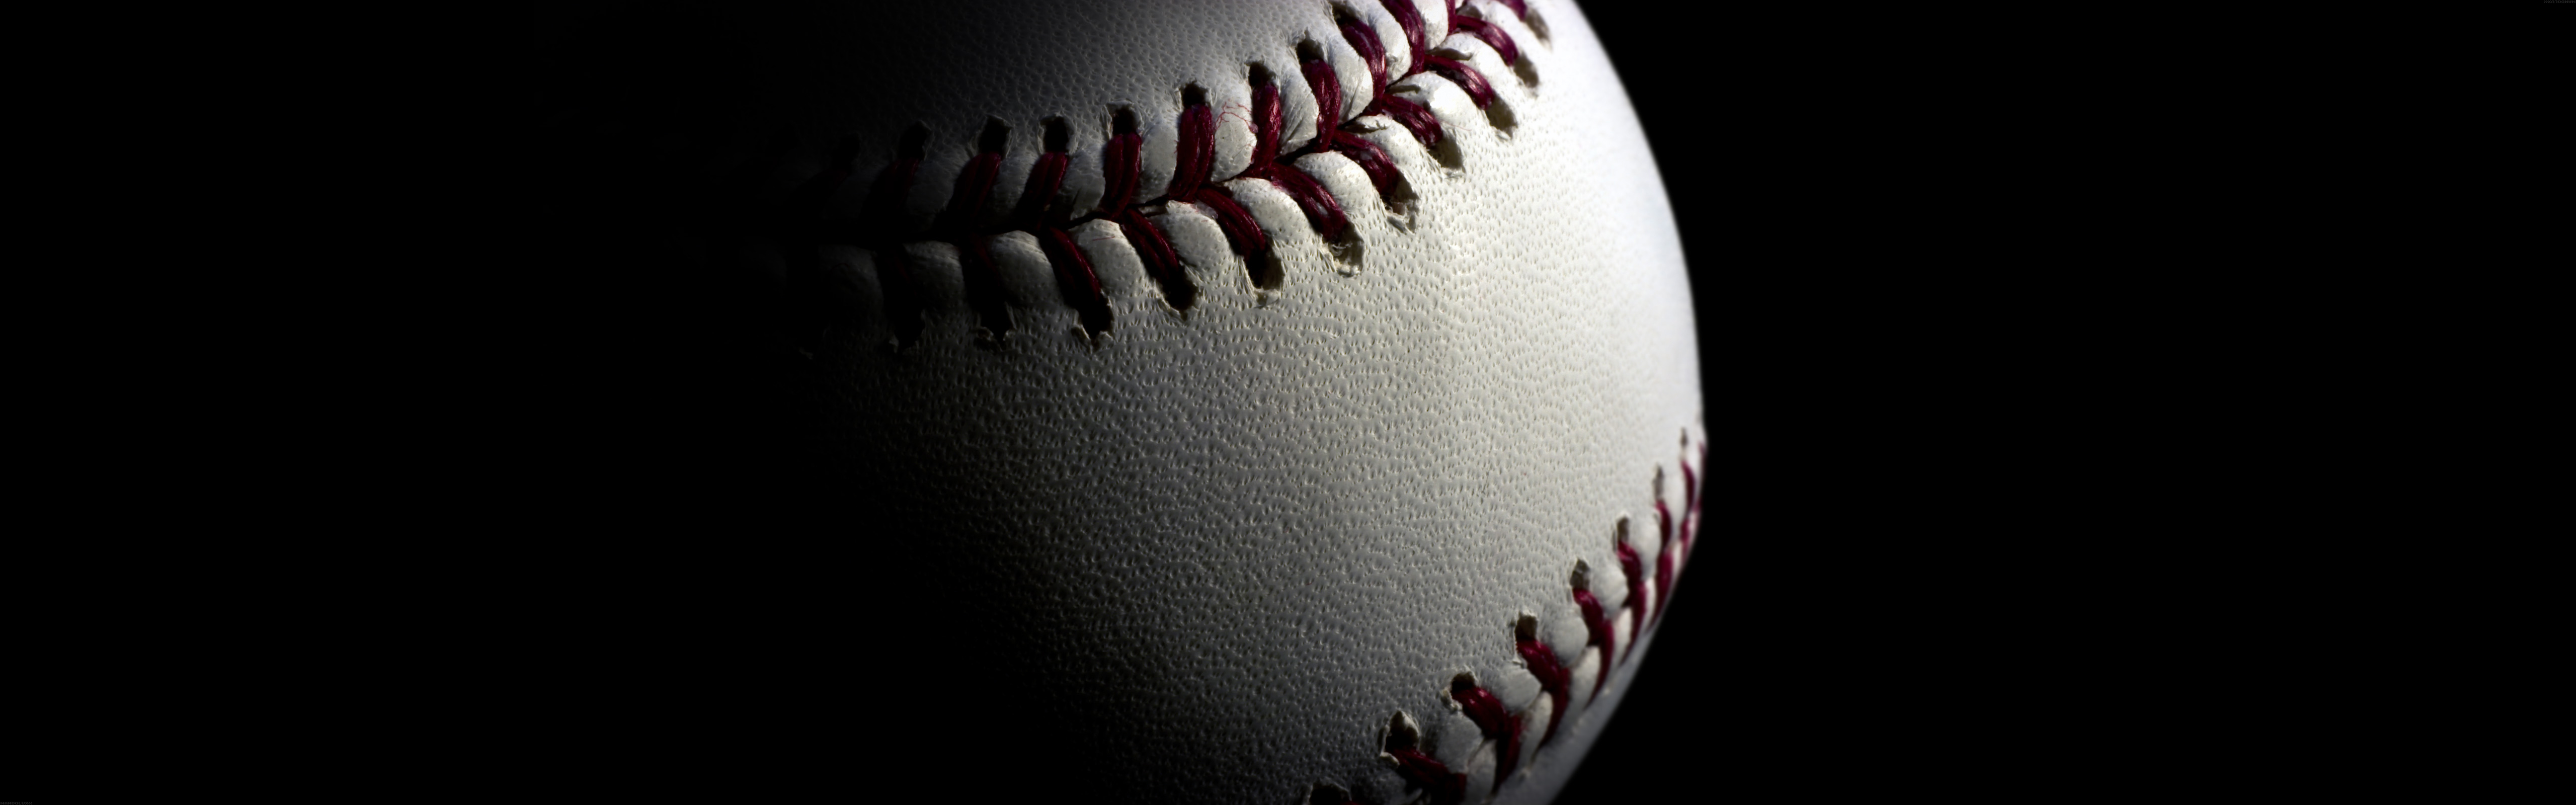 Baseball HD Wallpaper Background Image